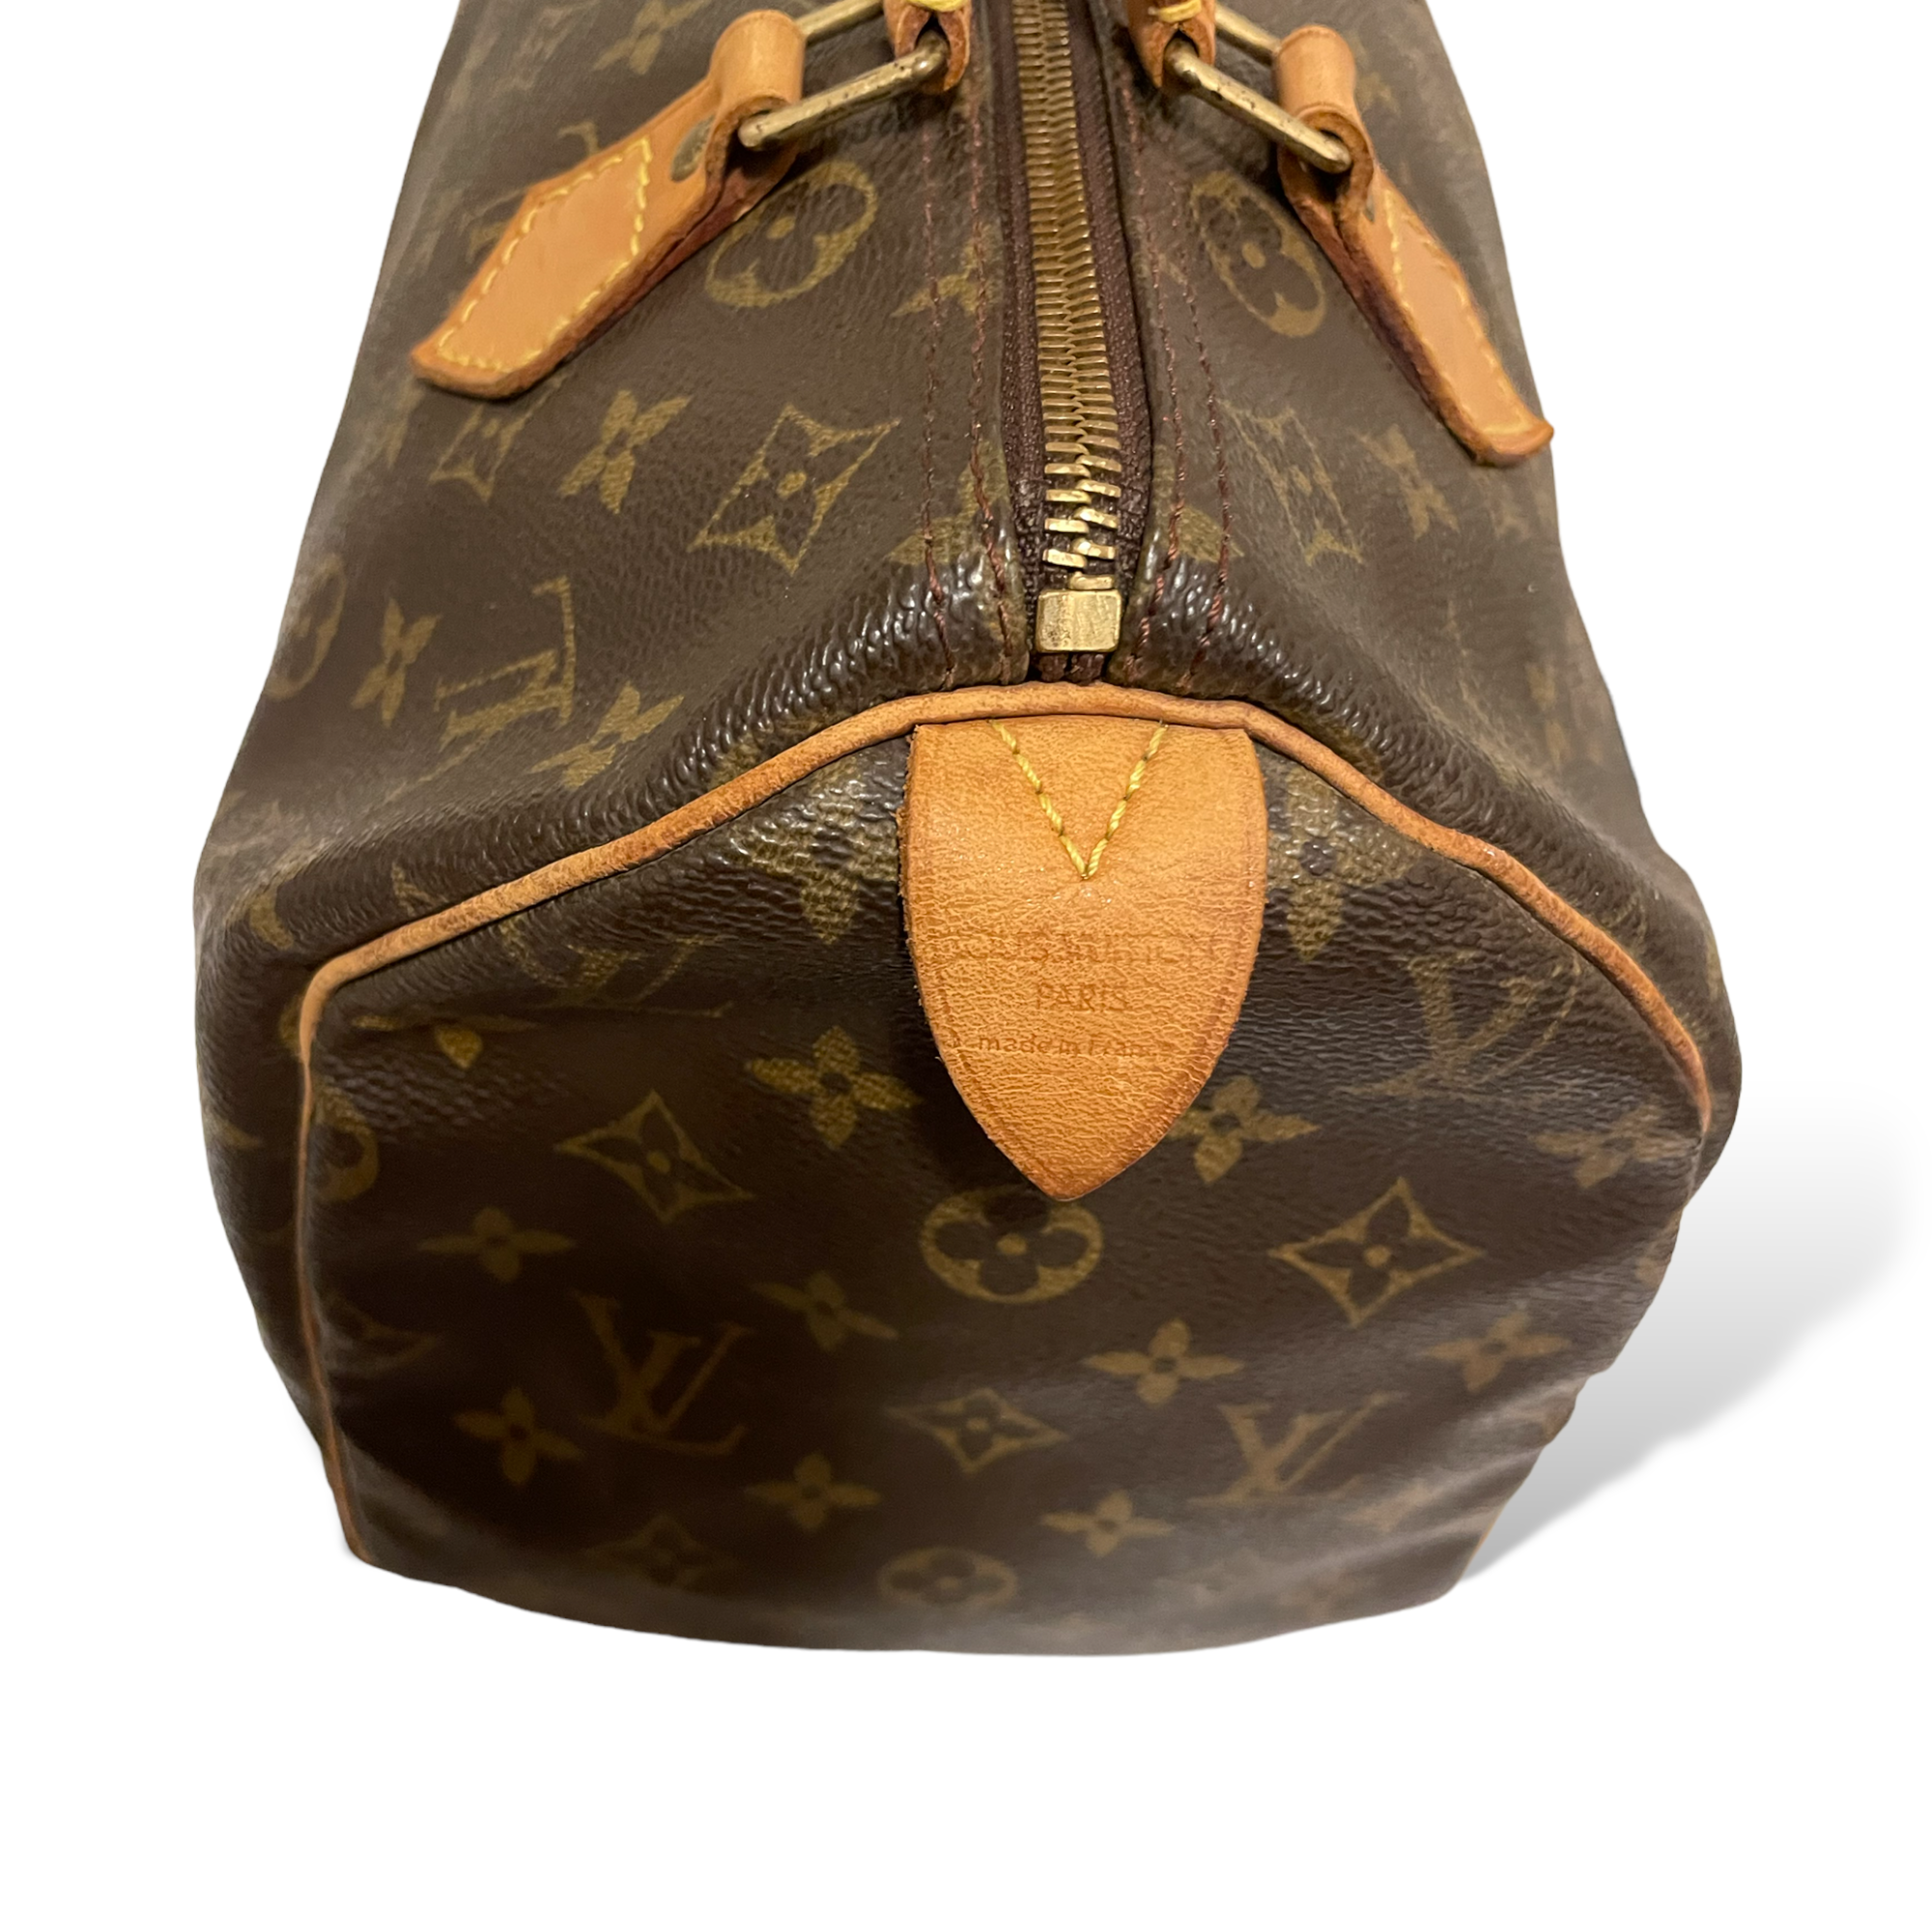 Louis Vuitton Vintage Speedy 30 handbag in iconic Monogram coated canvas with Vachetta leather trim